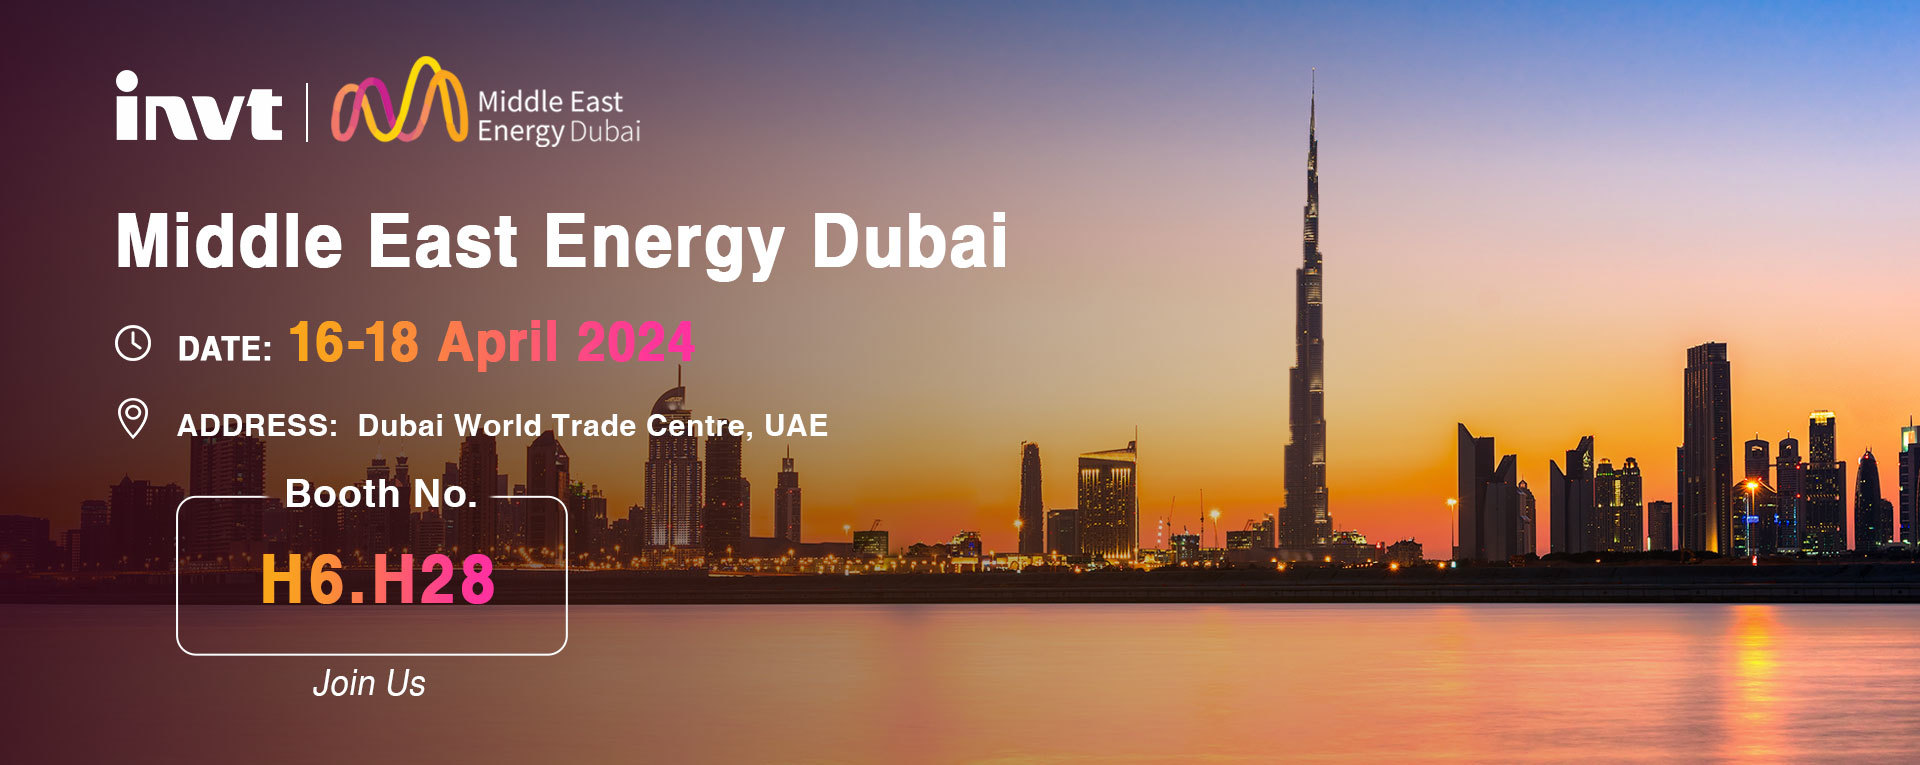 INVT Middle East Energy Dubai invitation